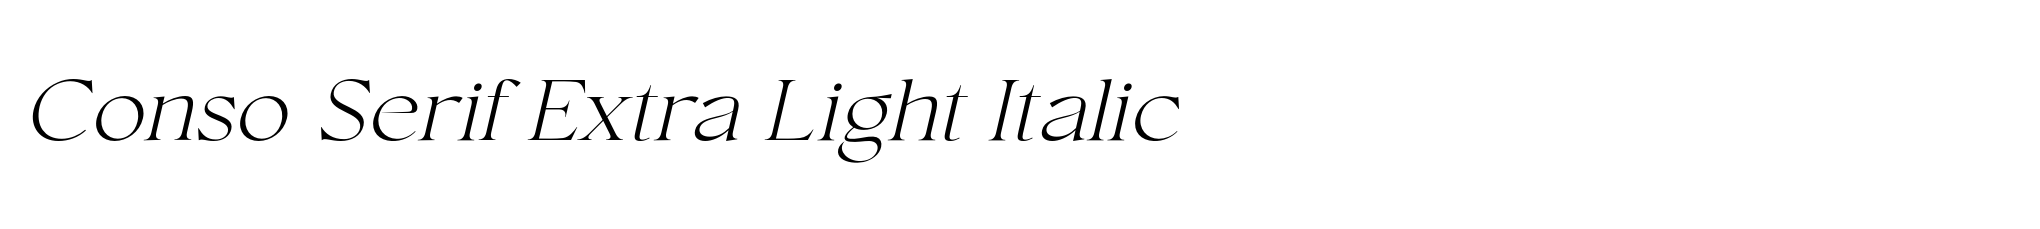 Conso Serif Extra Light Italic image